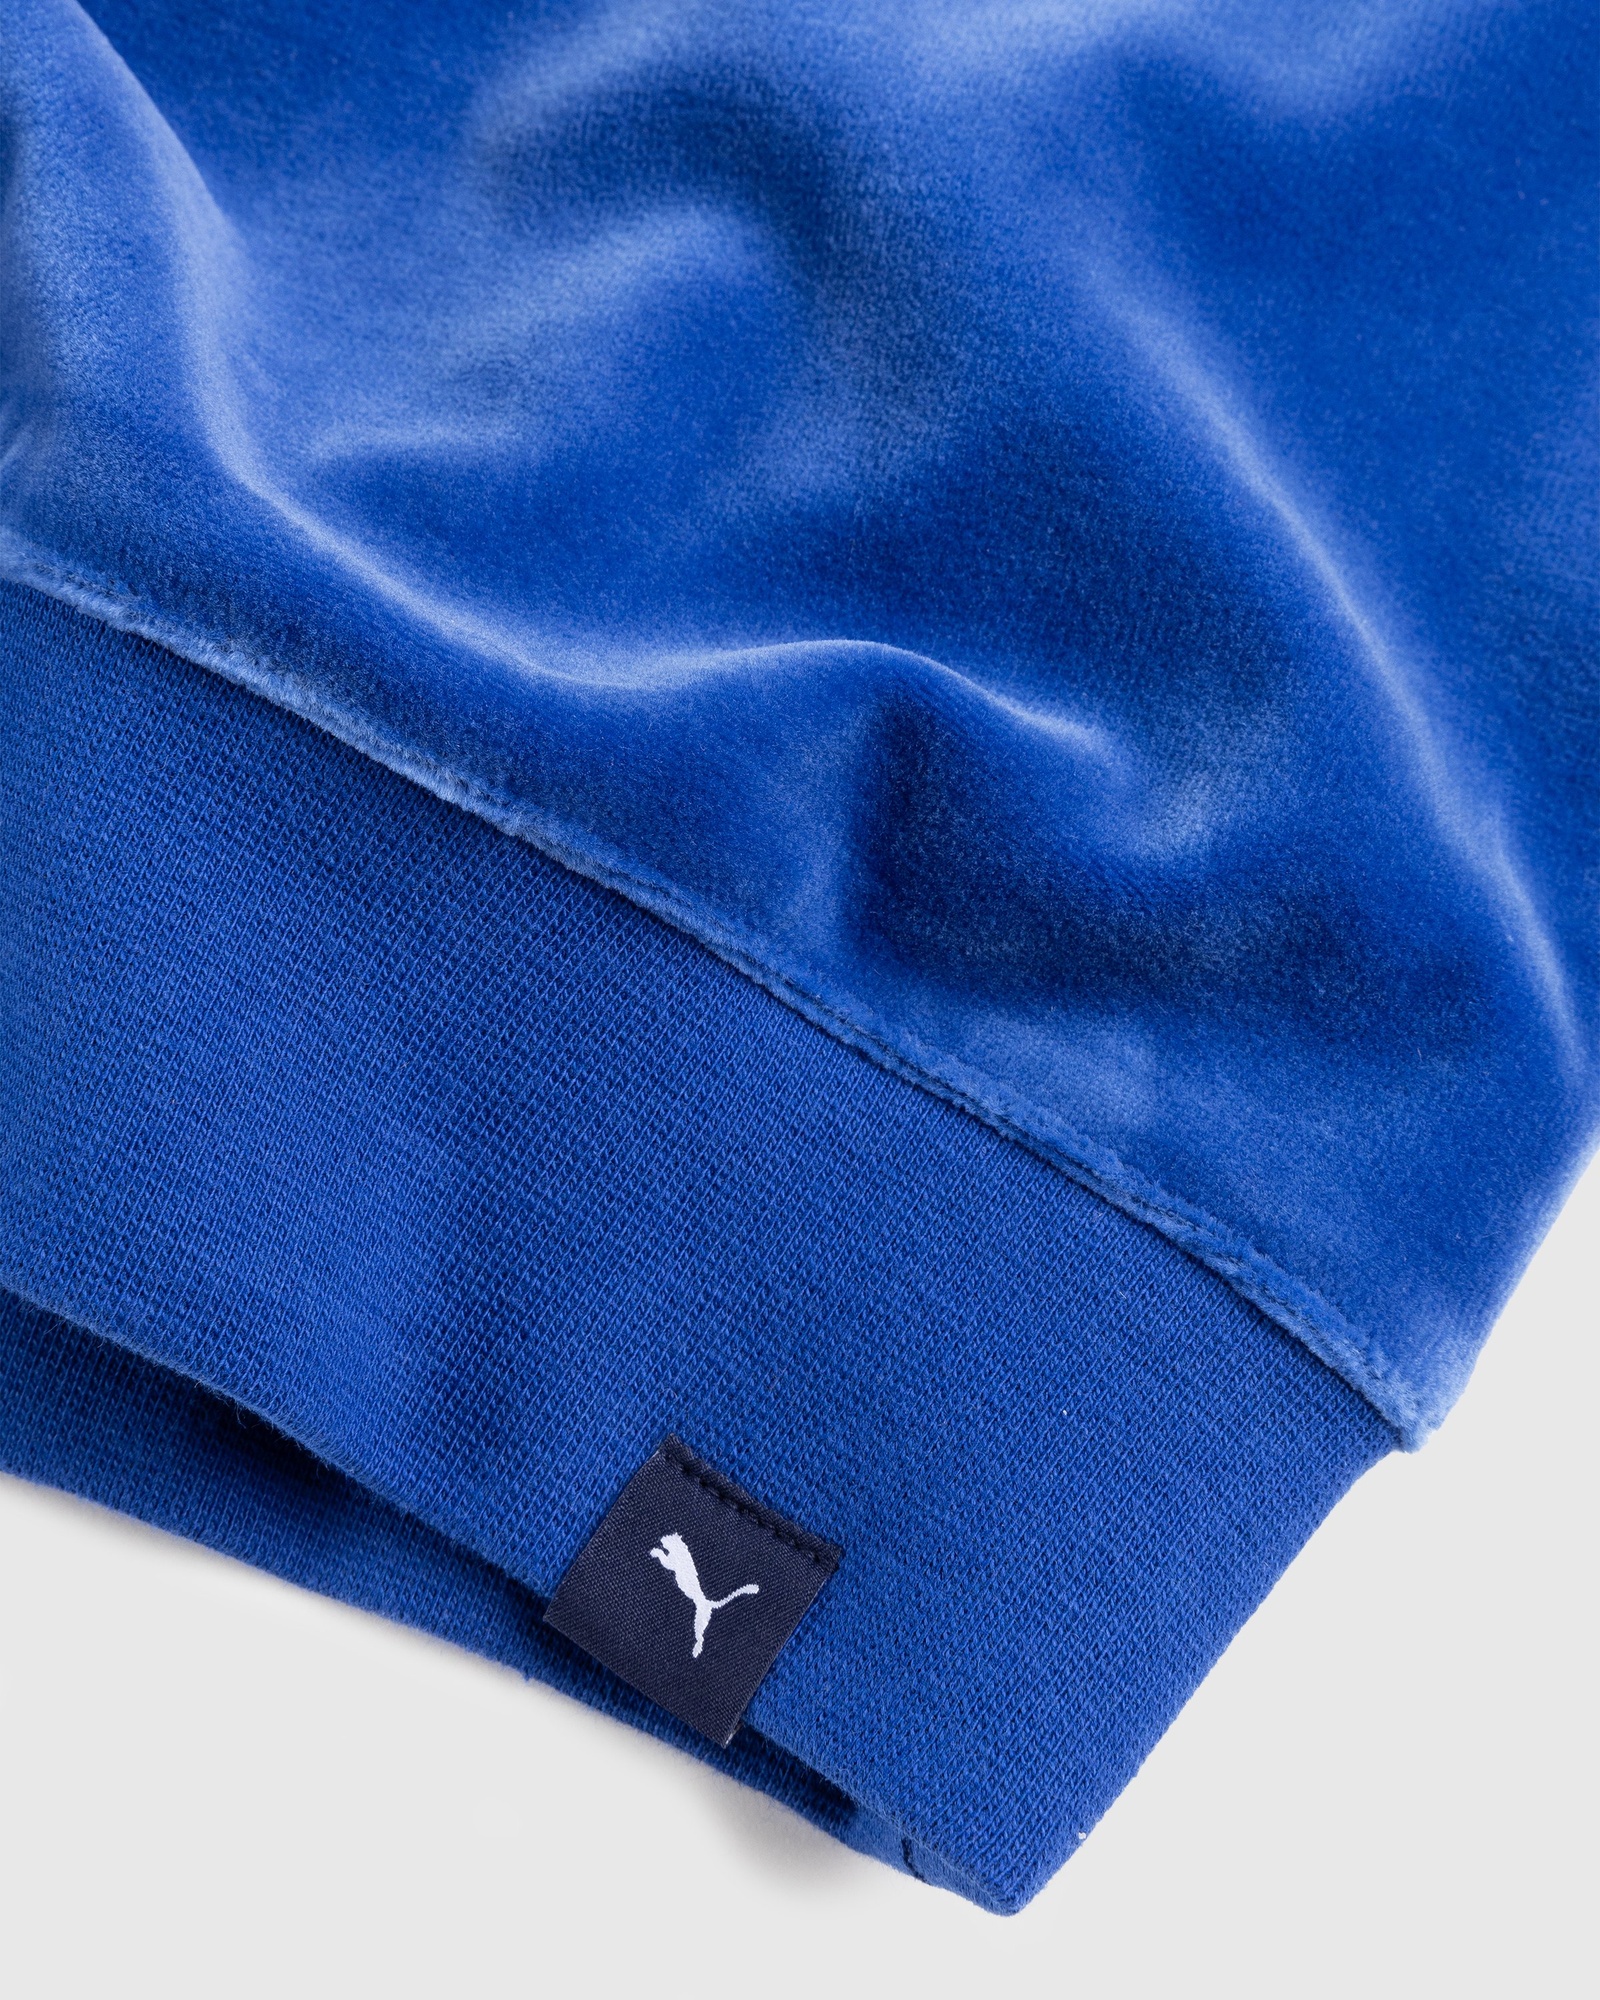 Puma x Noah – Vest Blue | Highsnobiety Shop